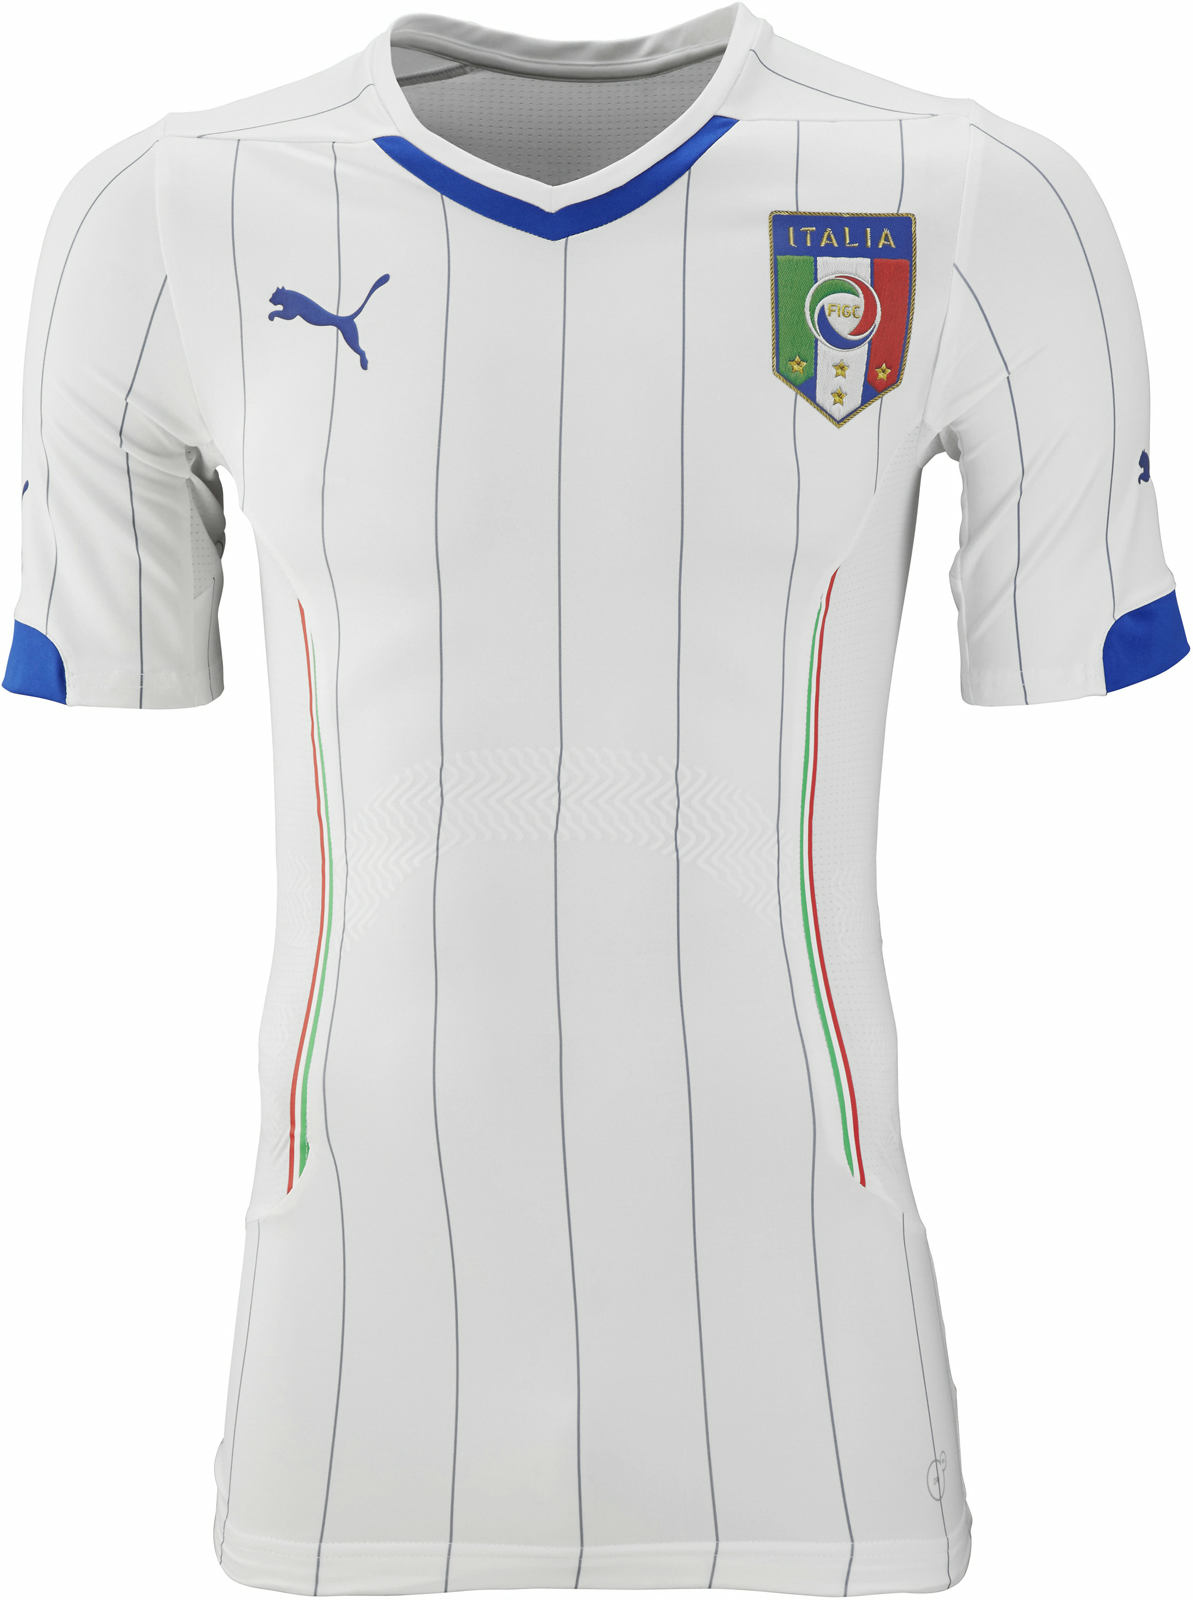 Italy+2014+World+Cup+Away+Kit+%281%29.jpg